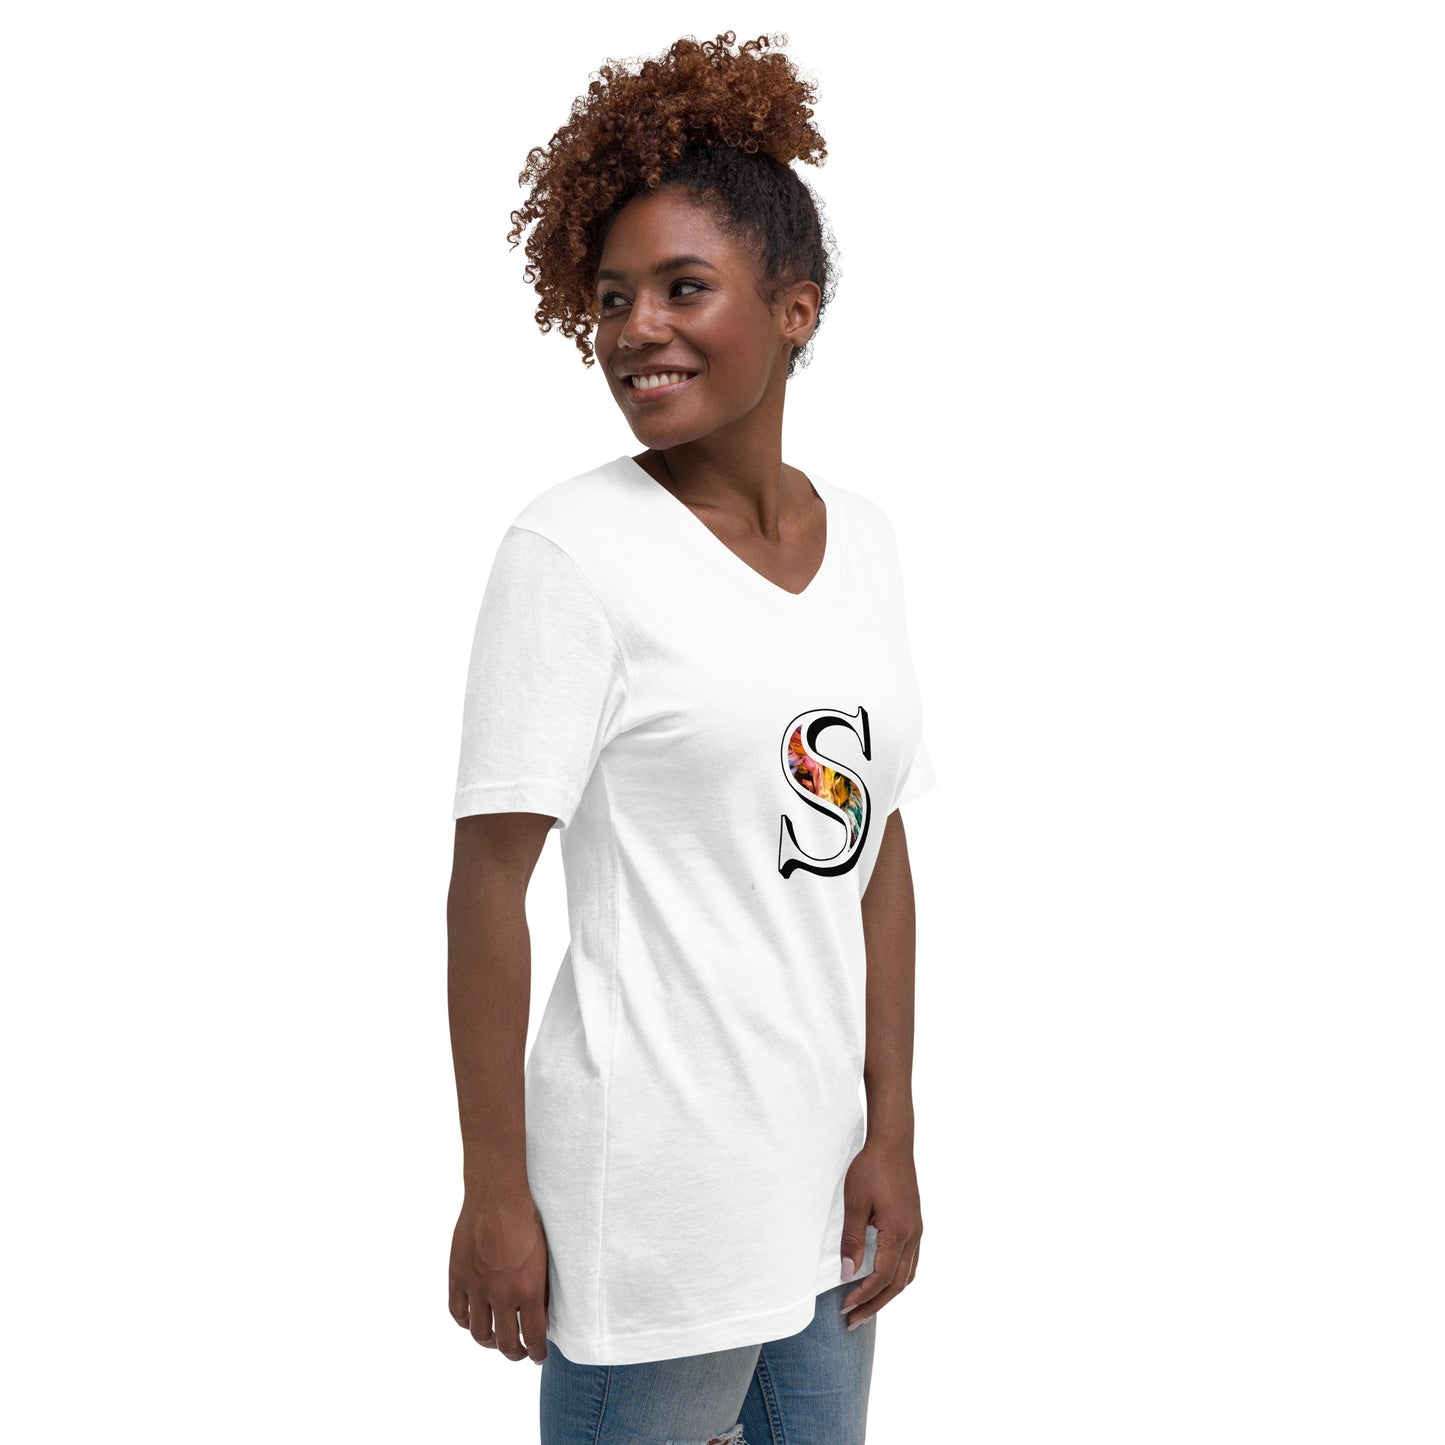 Souletics® V-Neck T-Shirt Womens